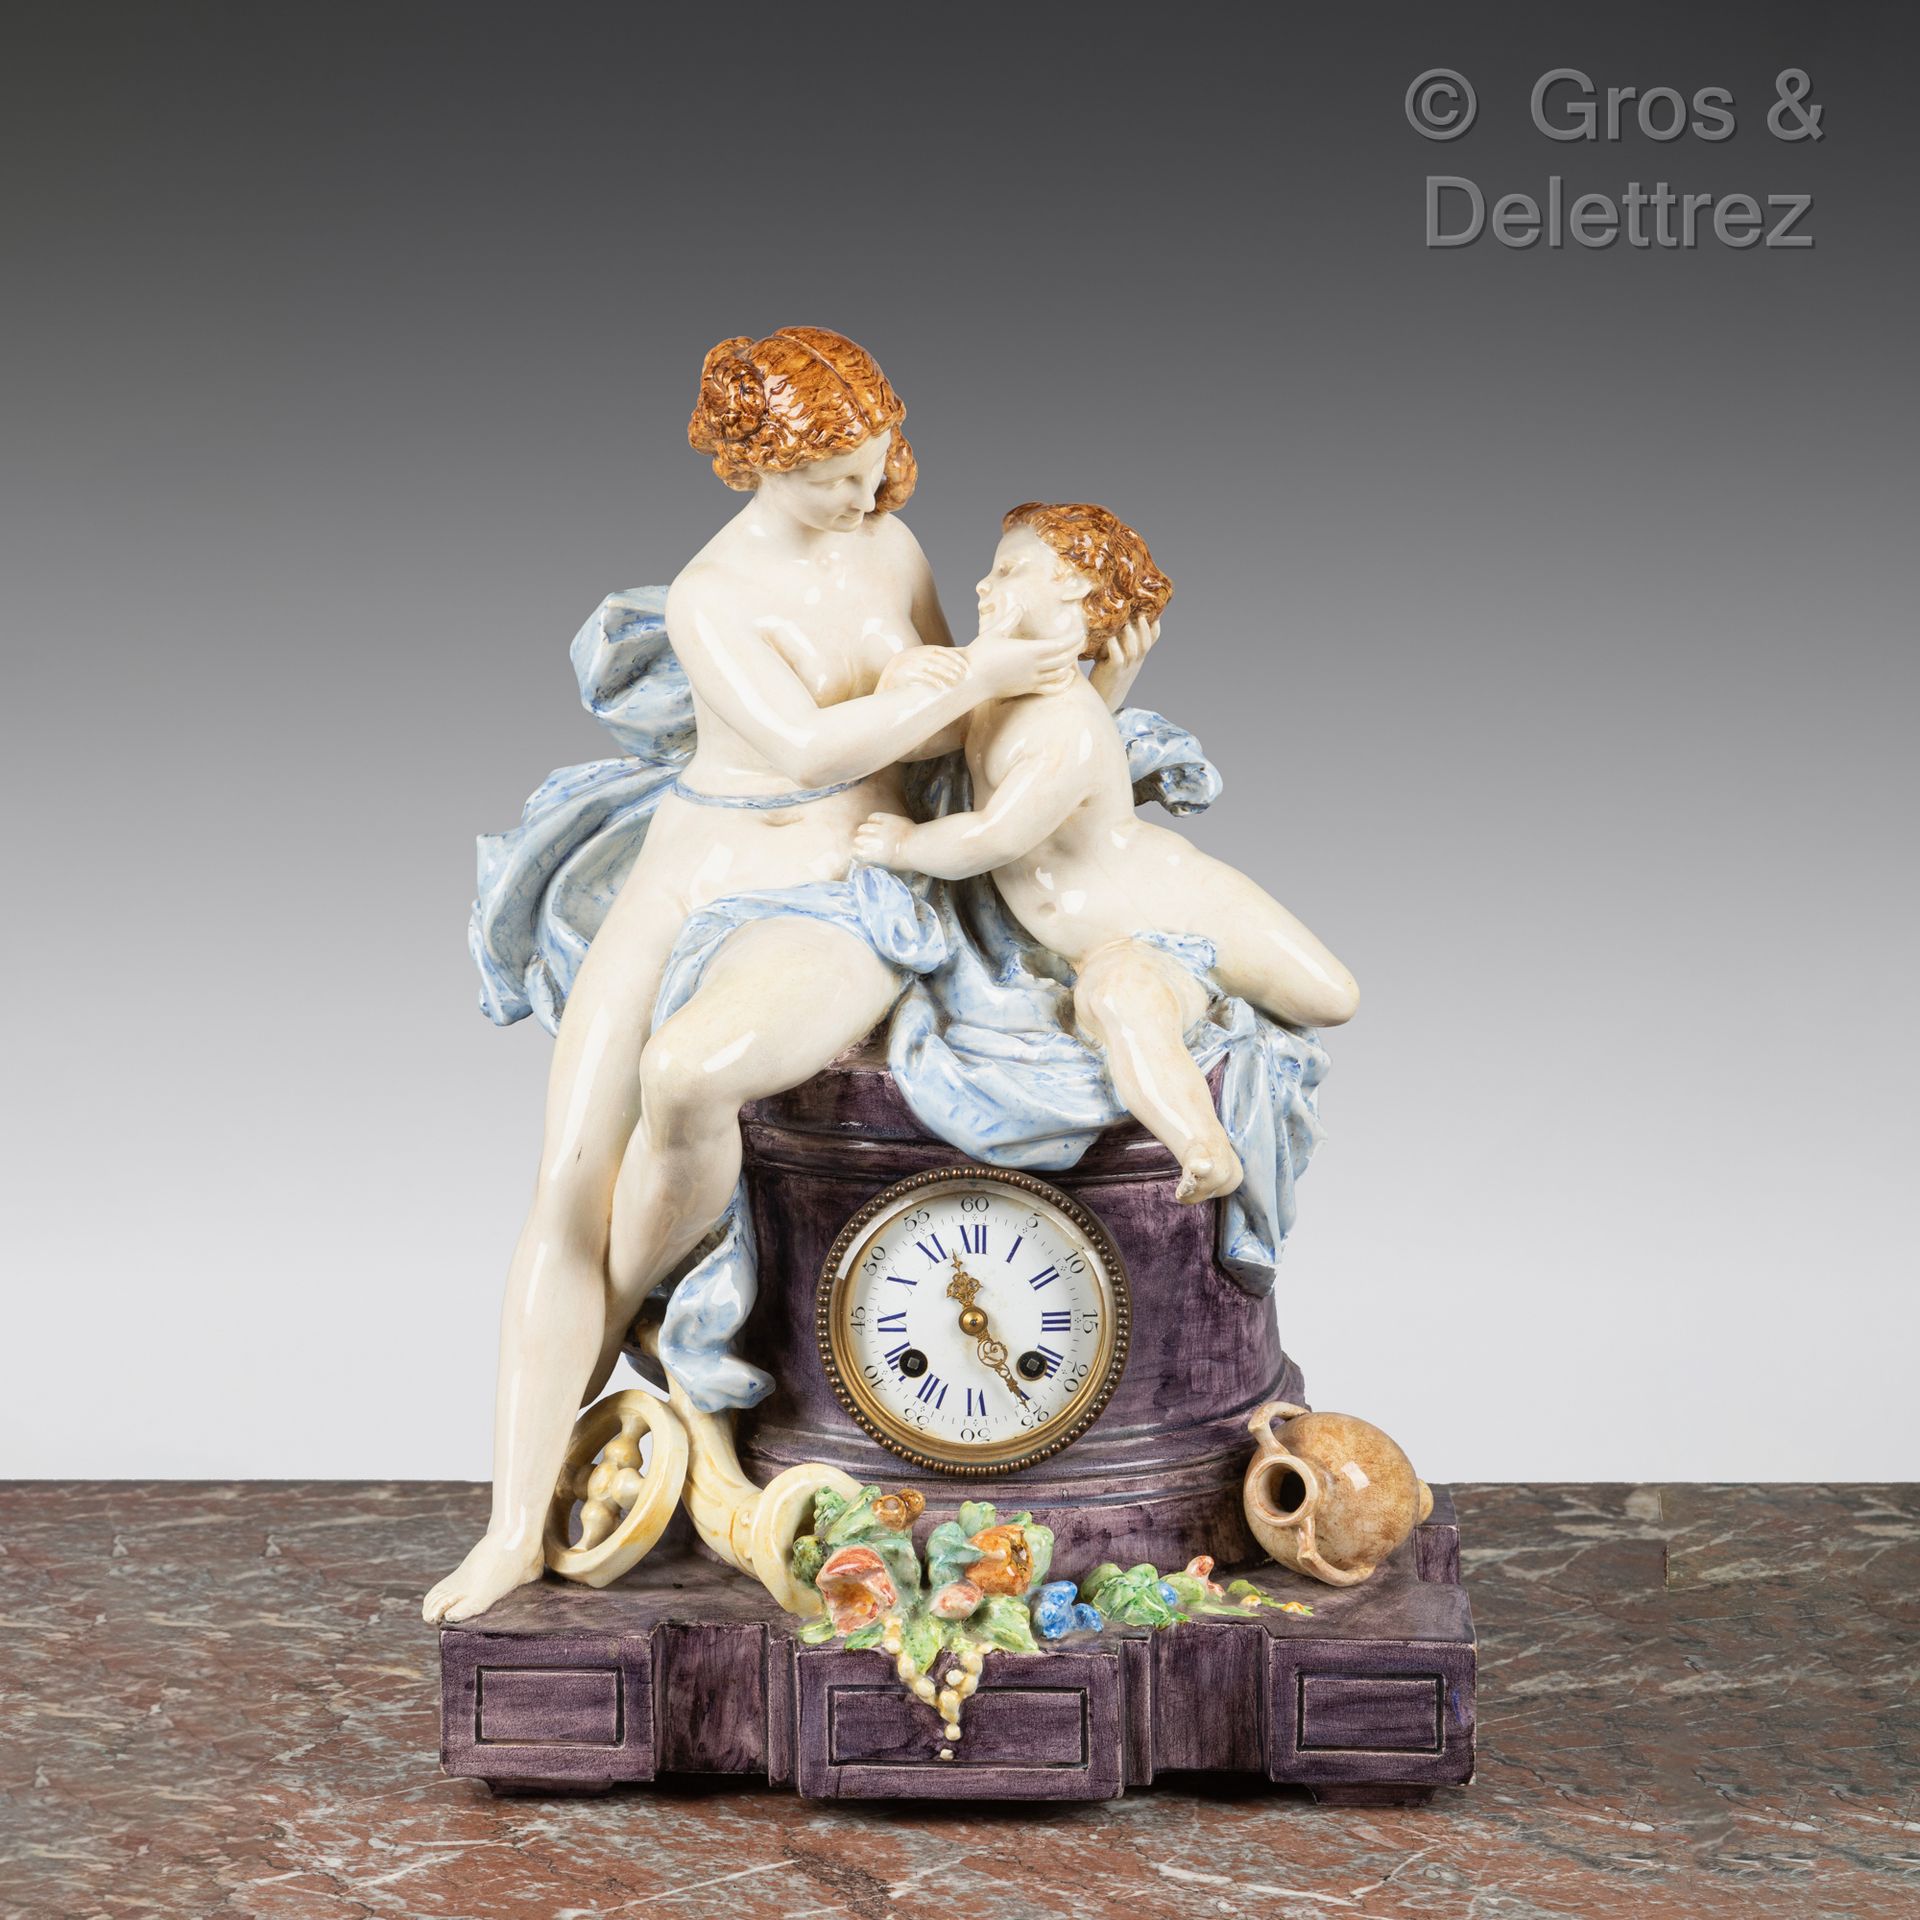 Null 多色珐琅彩陶瓷钟，显示维纳斯和爱情坐在半圆柱上，脚下是玉米棒。

背面署名 "Montigny-sur-Loing"。

高度：46厘米